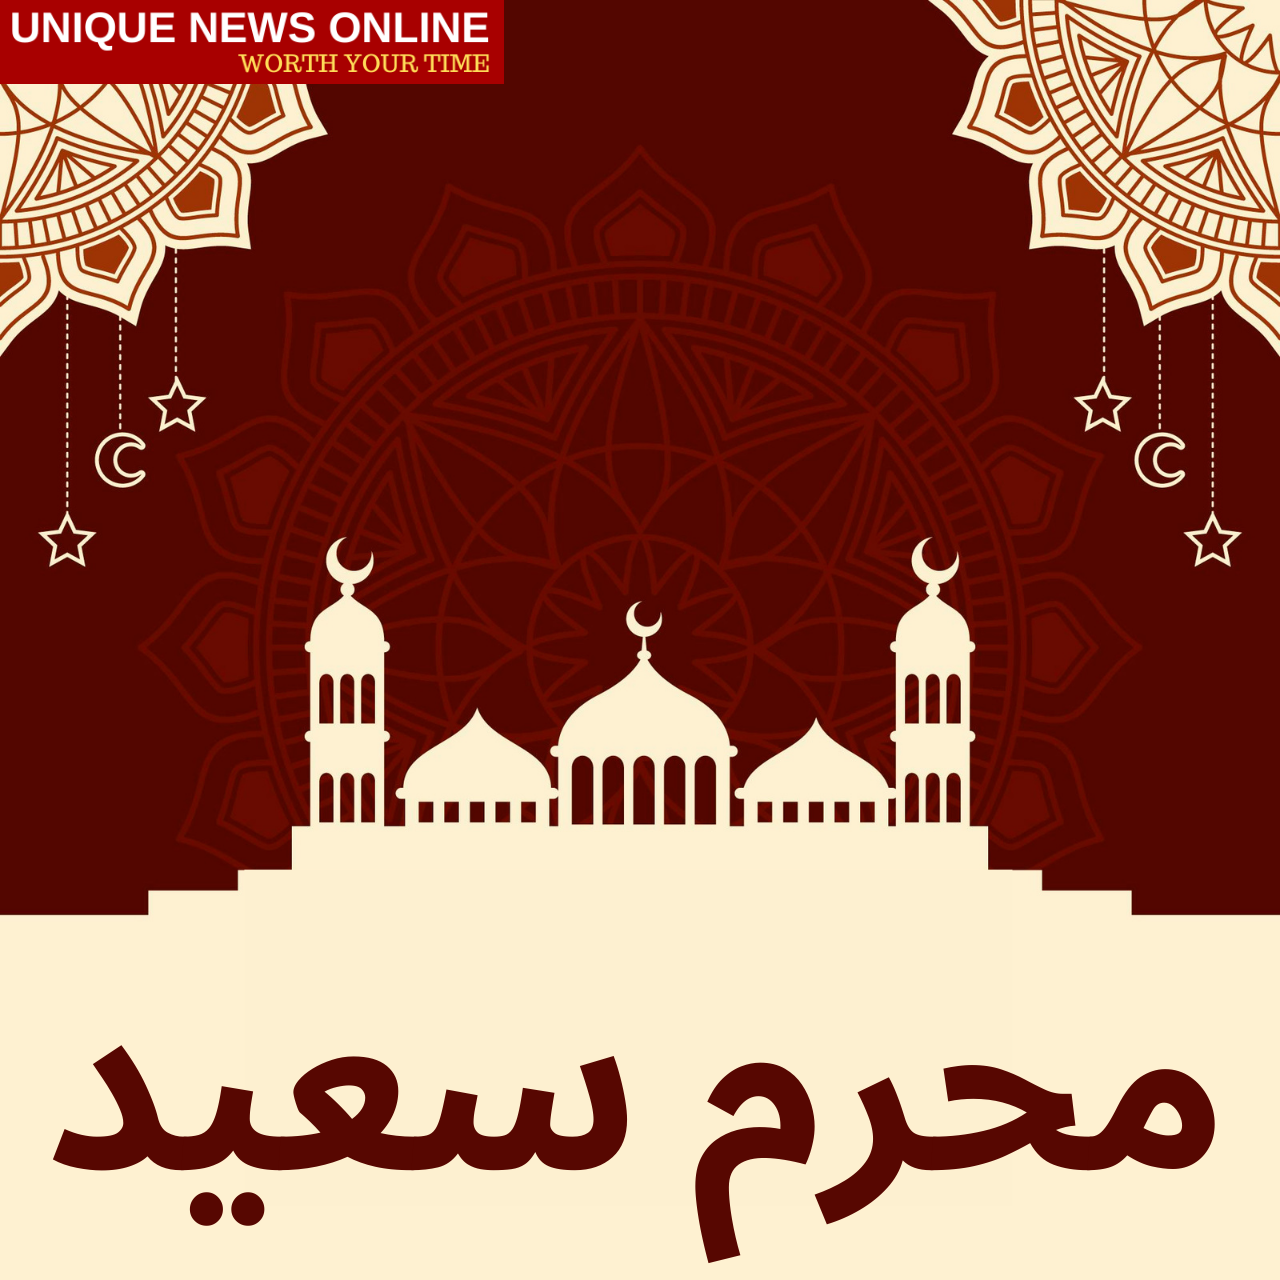 Muharram 2021 Arabic Wishes, Status, Greetings HD Images, Shayari, and Quotes to share